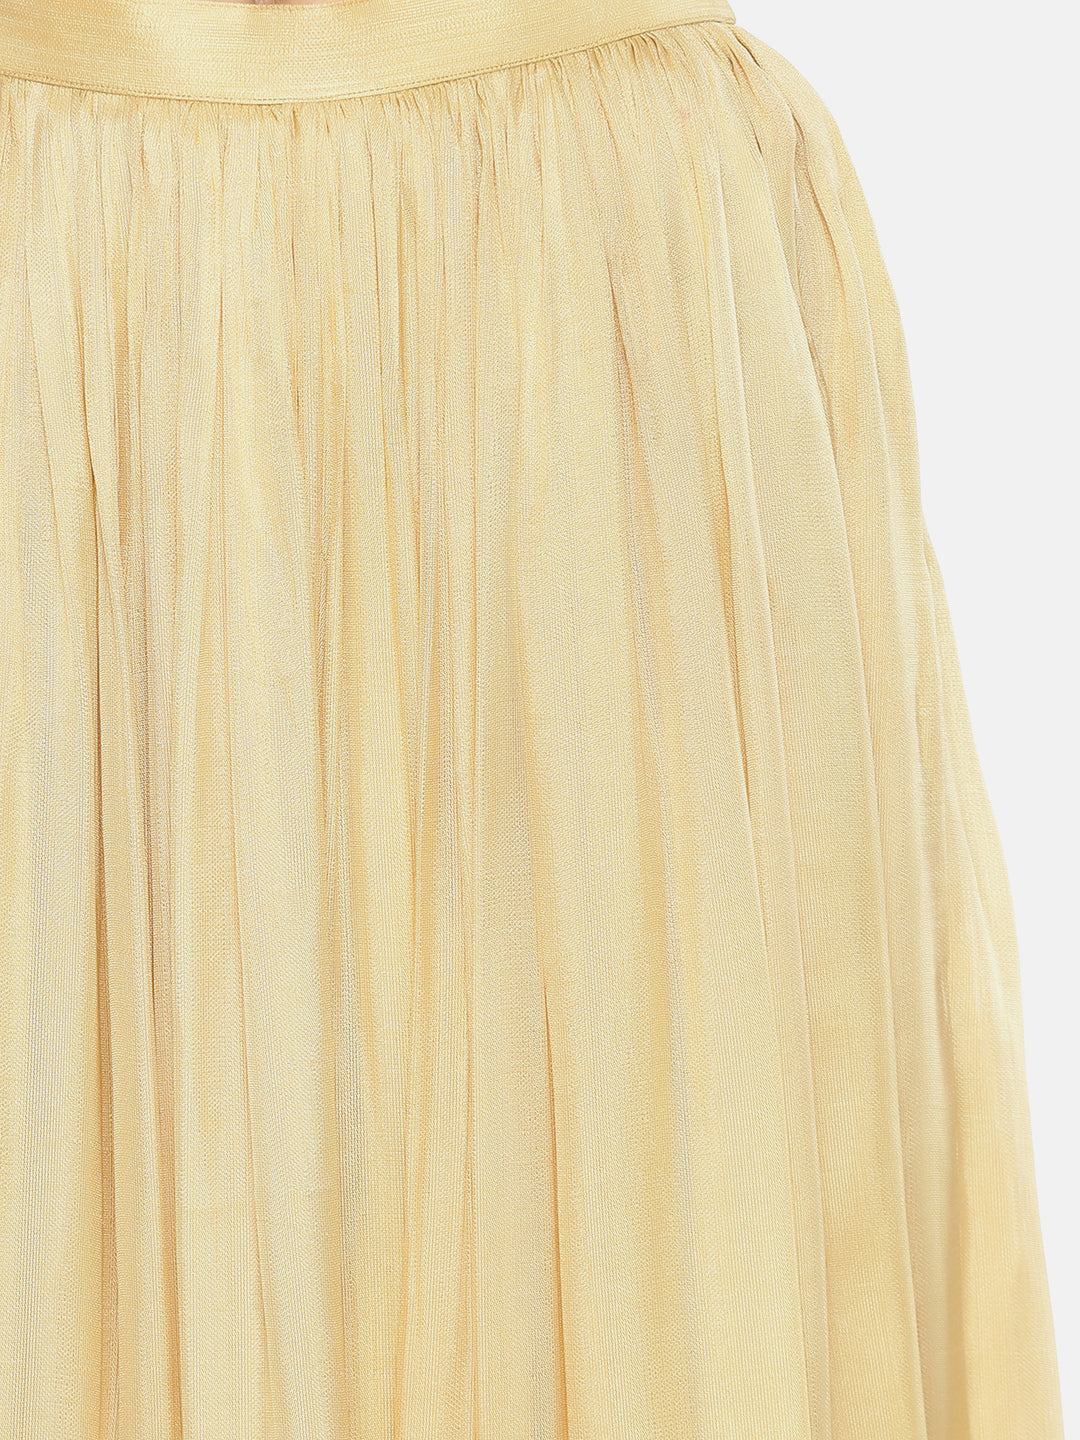 Light Yellow Gathers Skirt - Studio Y